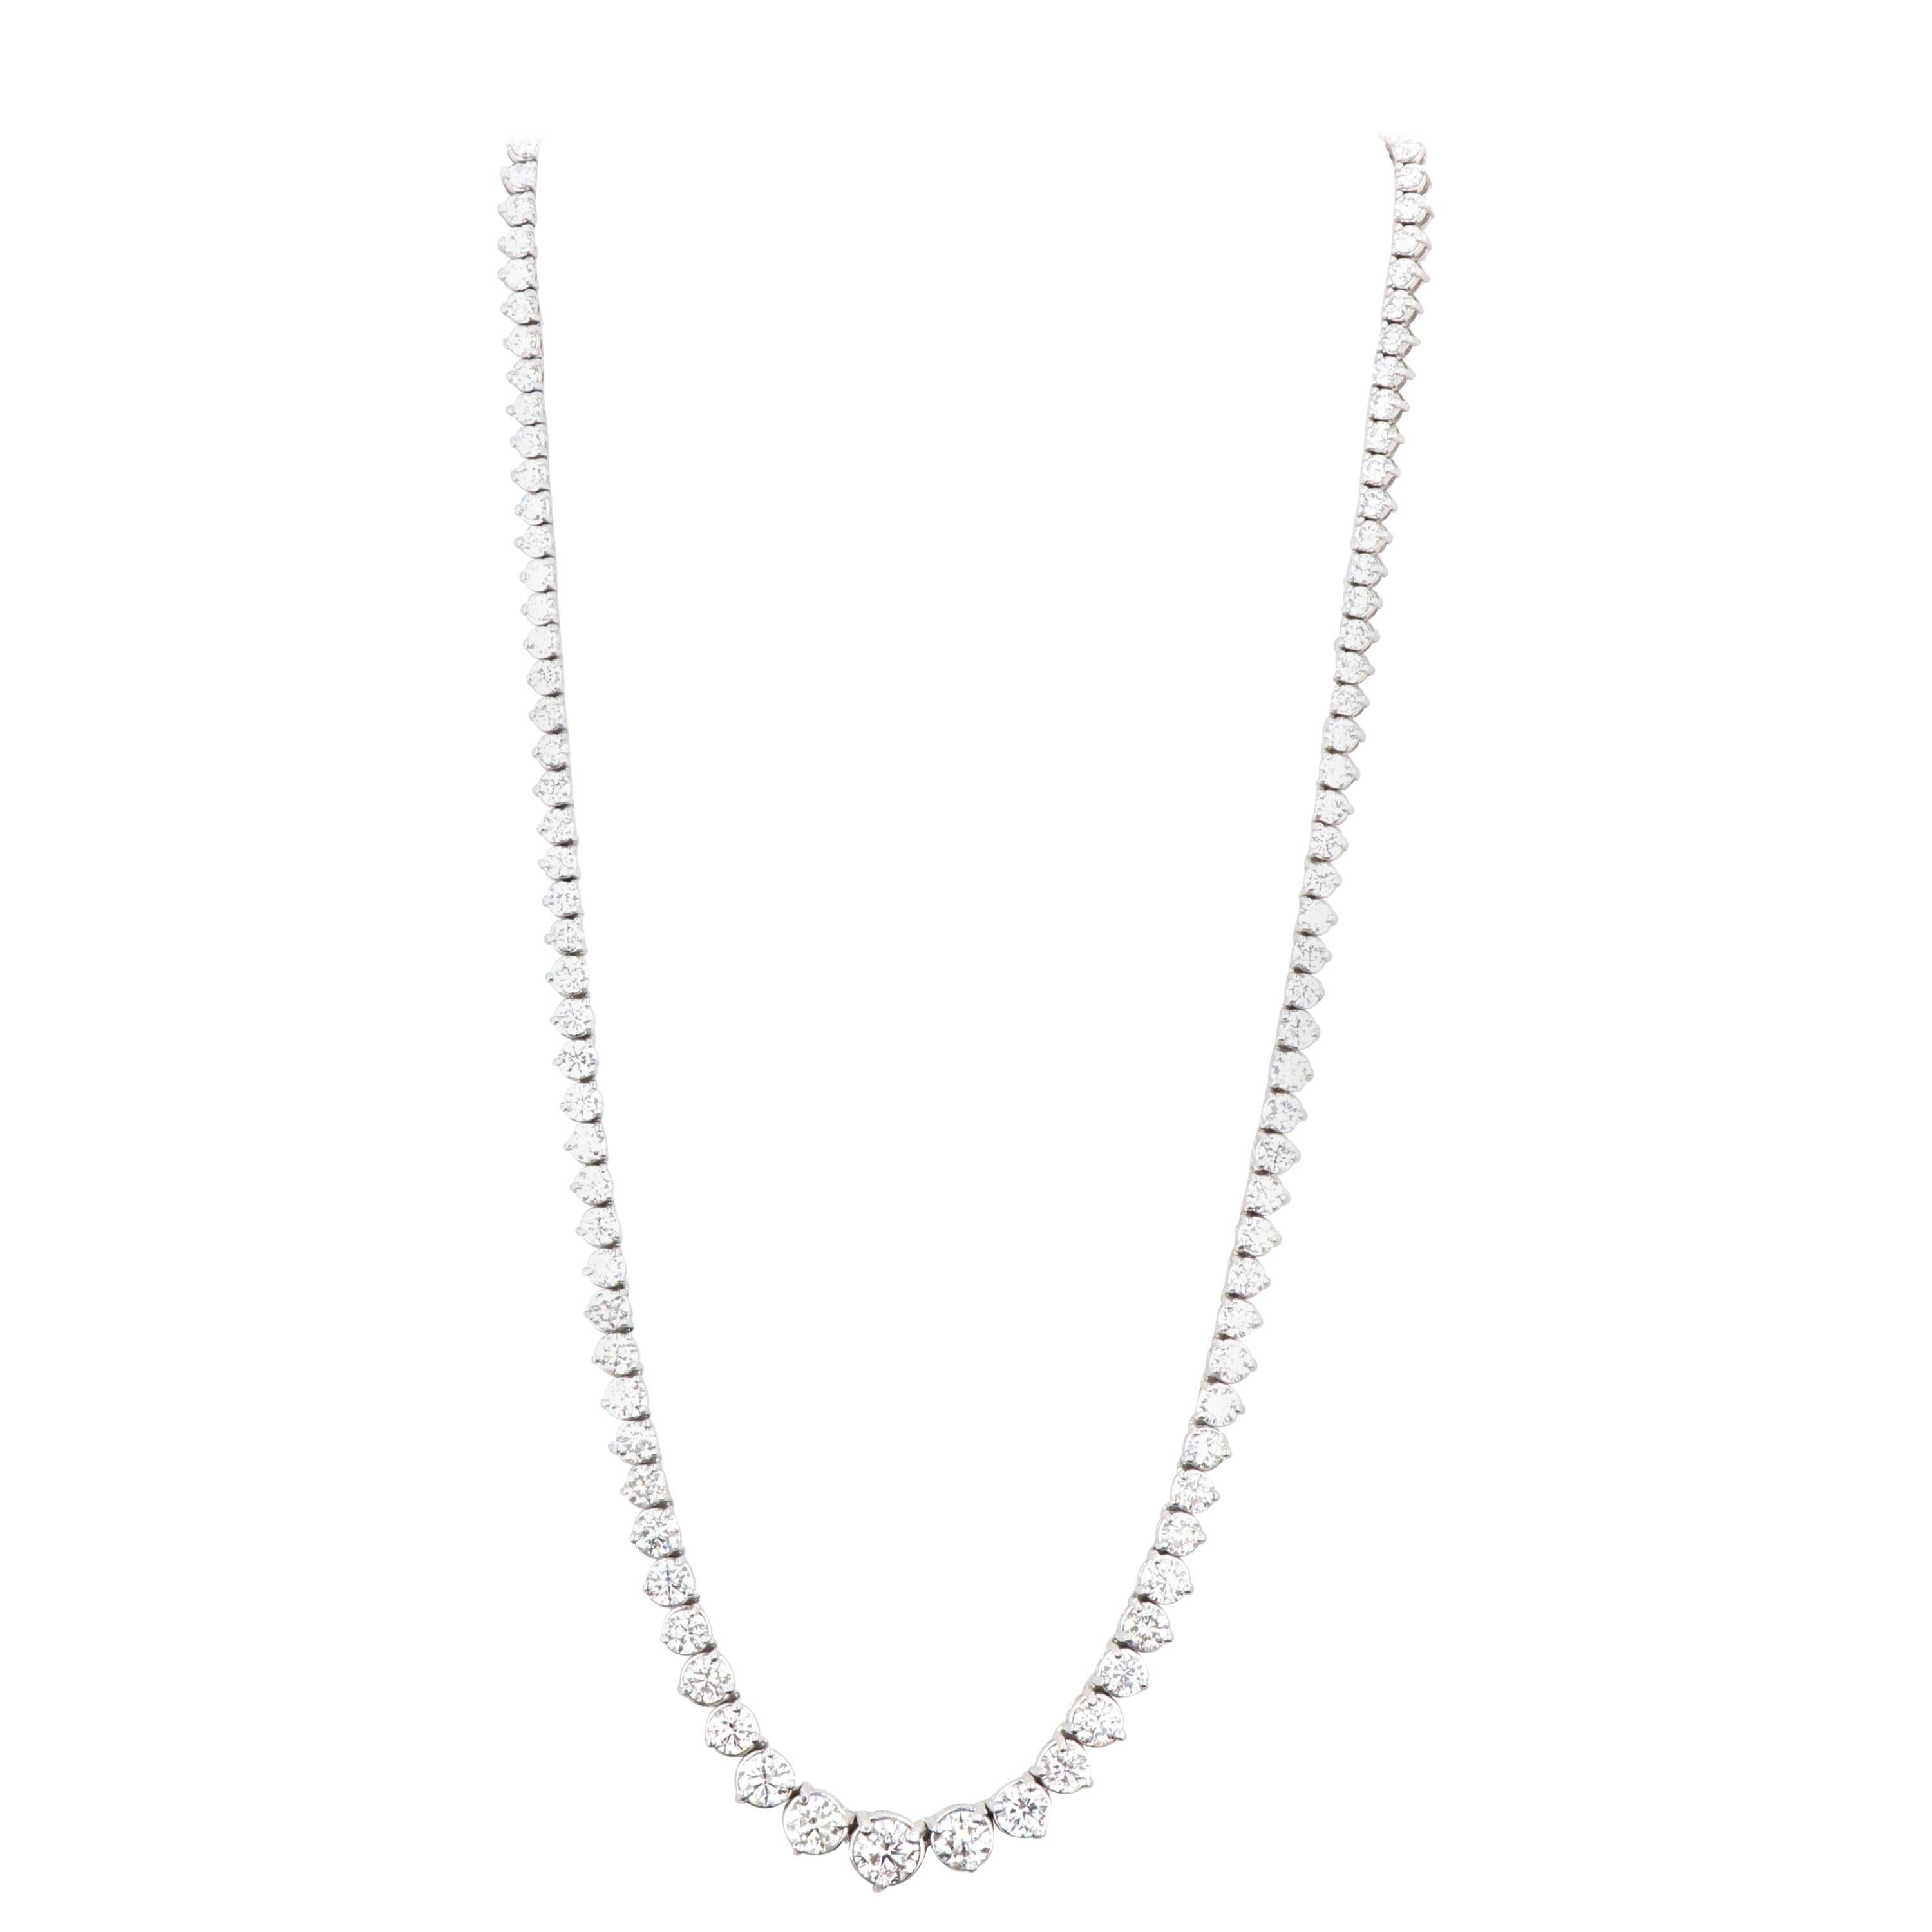 White Gold 17.39 Carat Graduated Round Brilliant Diamond Necklace